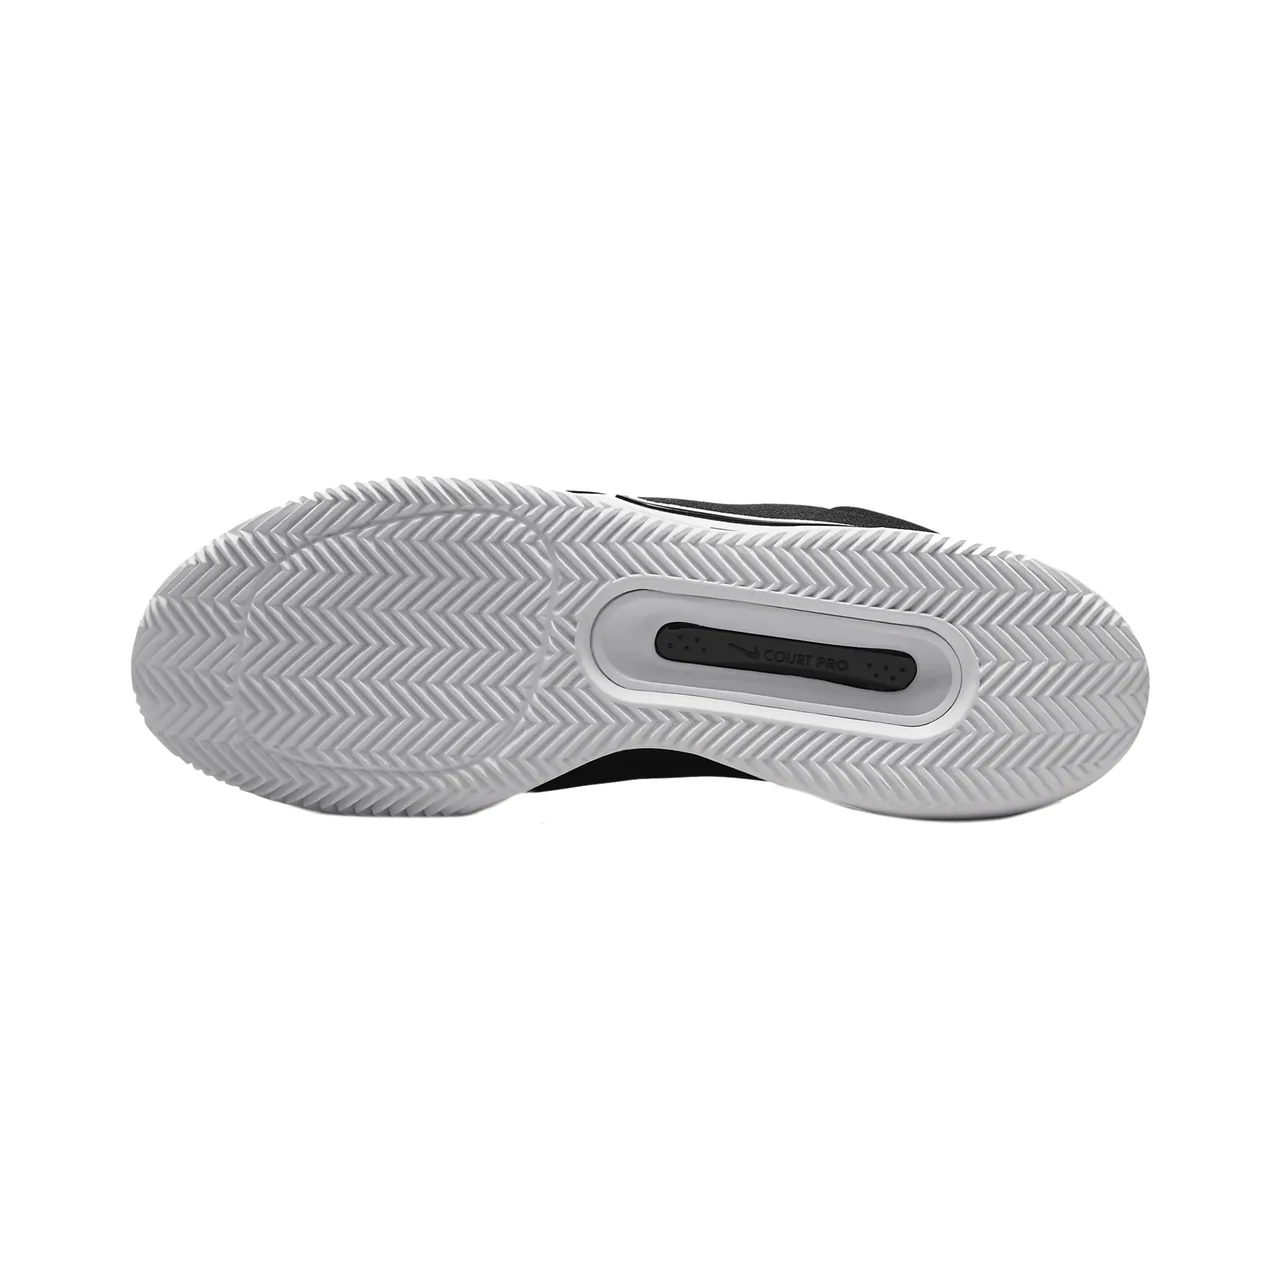 Nike Court Zoom Pro Clay/Padel Black/White